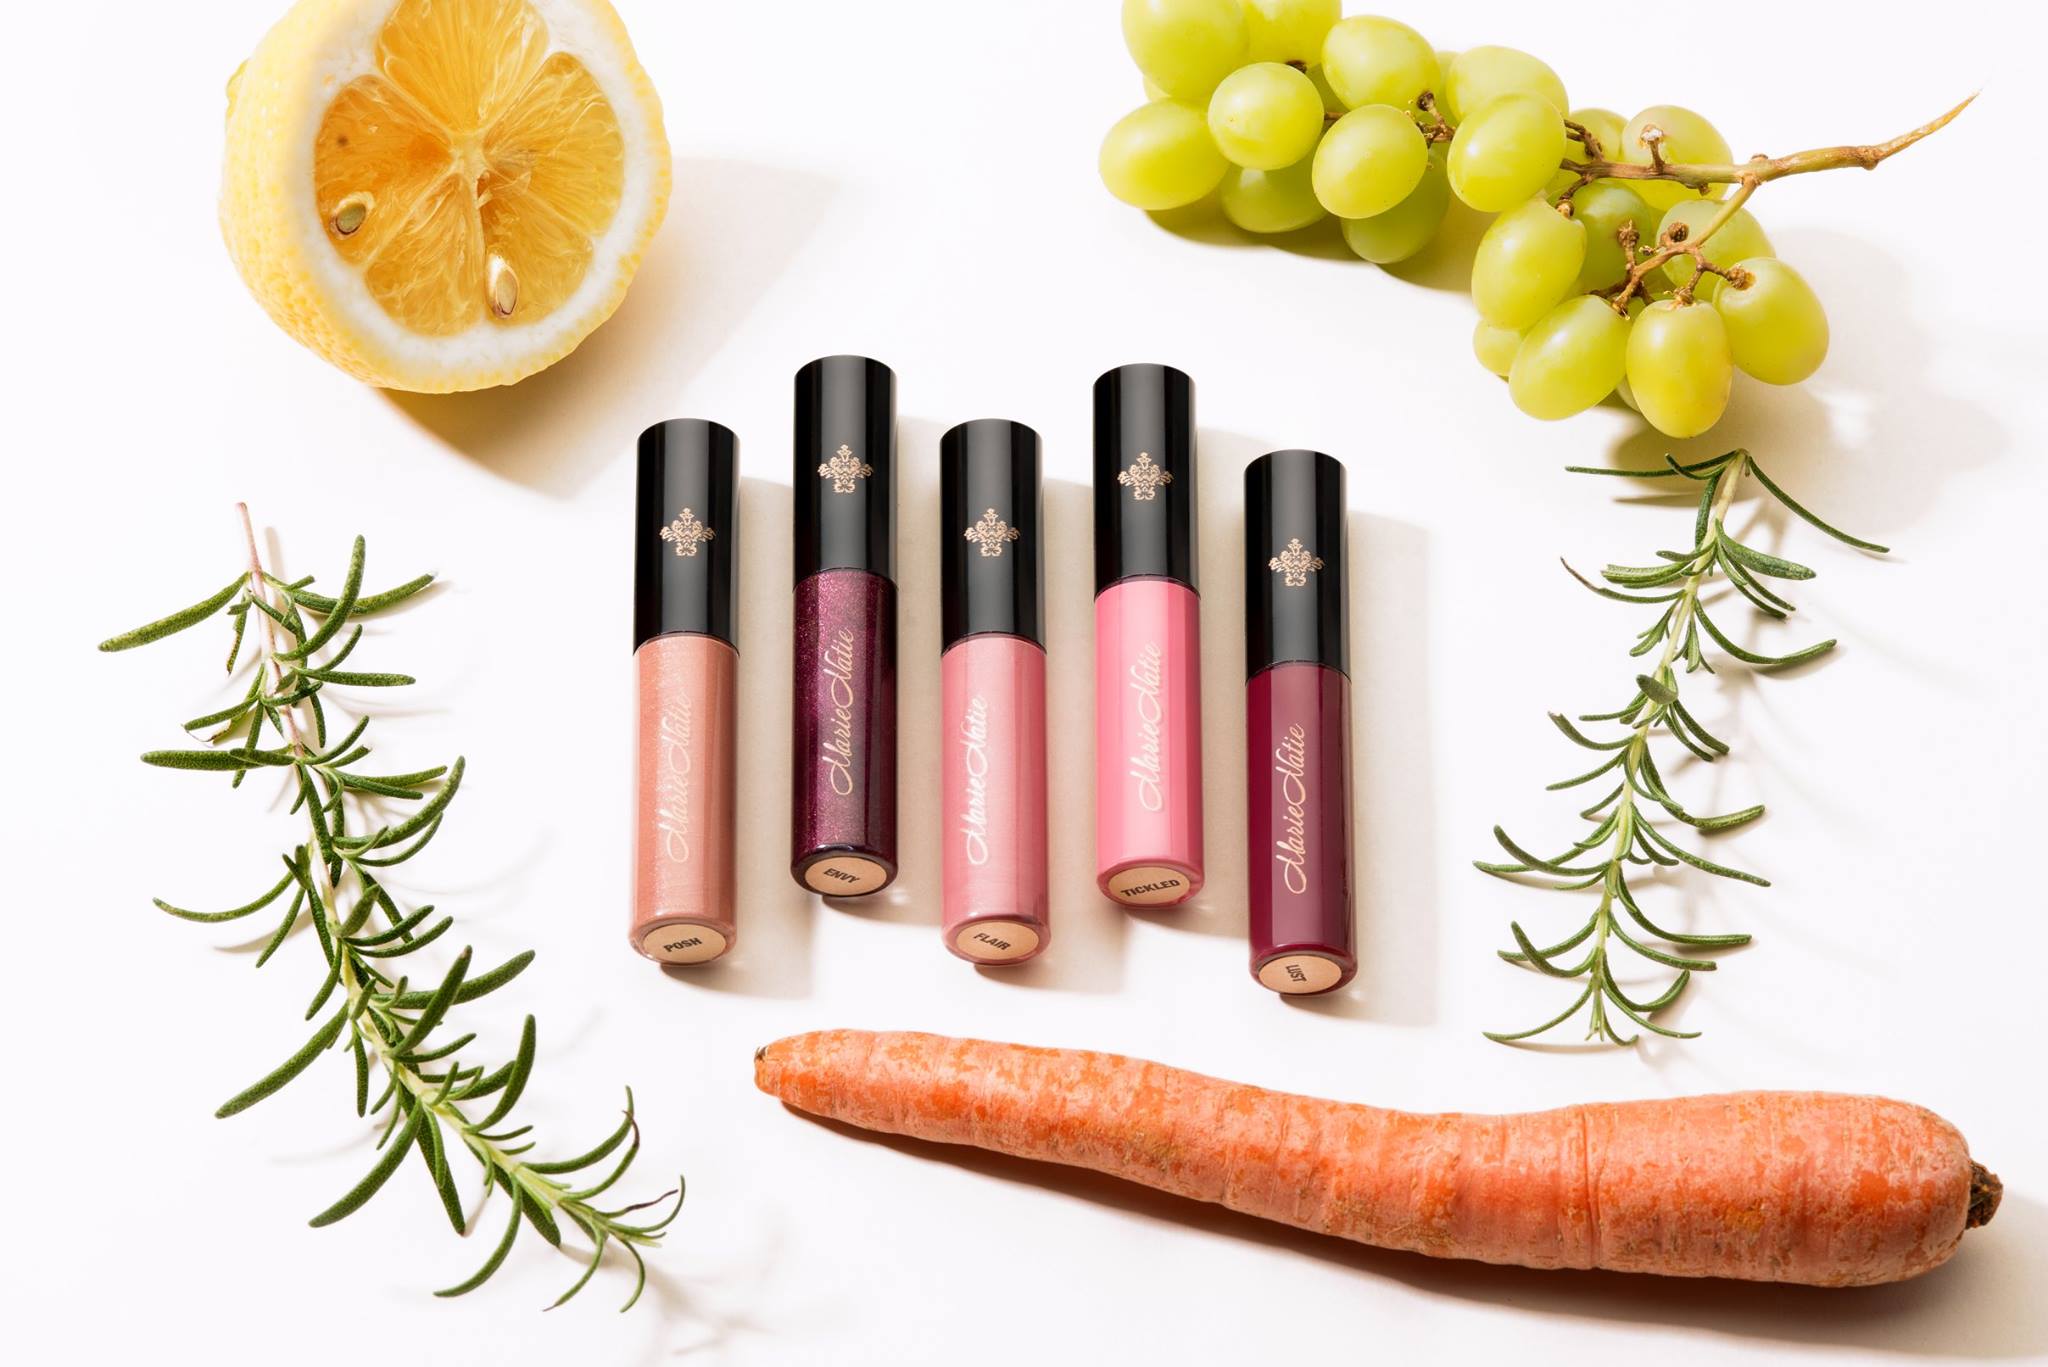 MarieNatie lip gloss moisturizing ingredients non-toxic cruelty free 